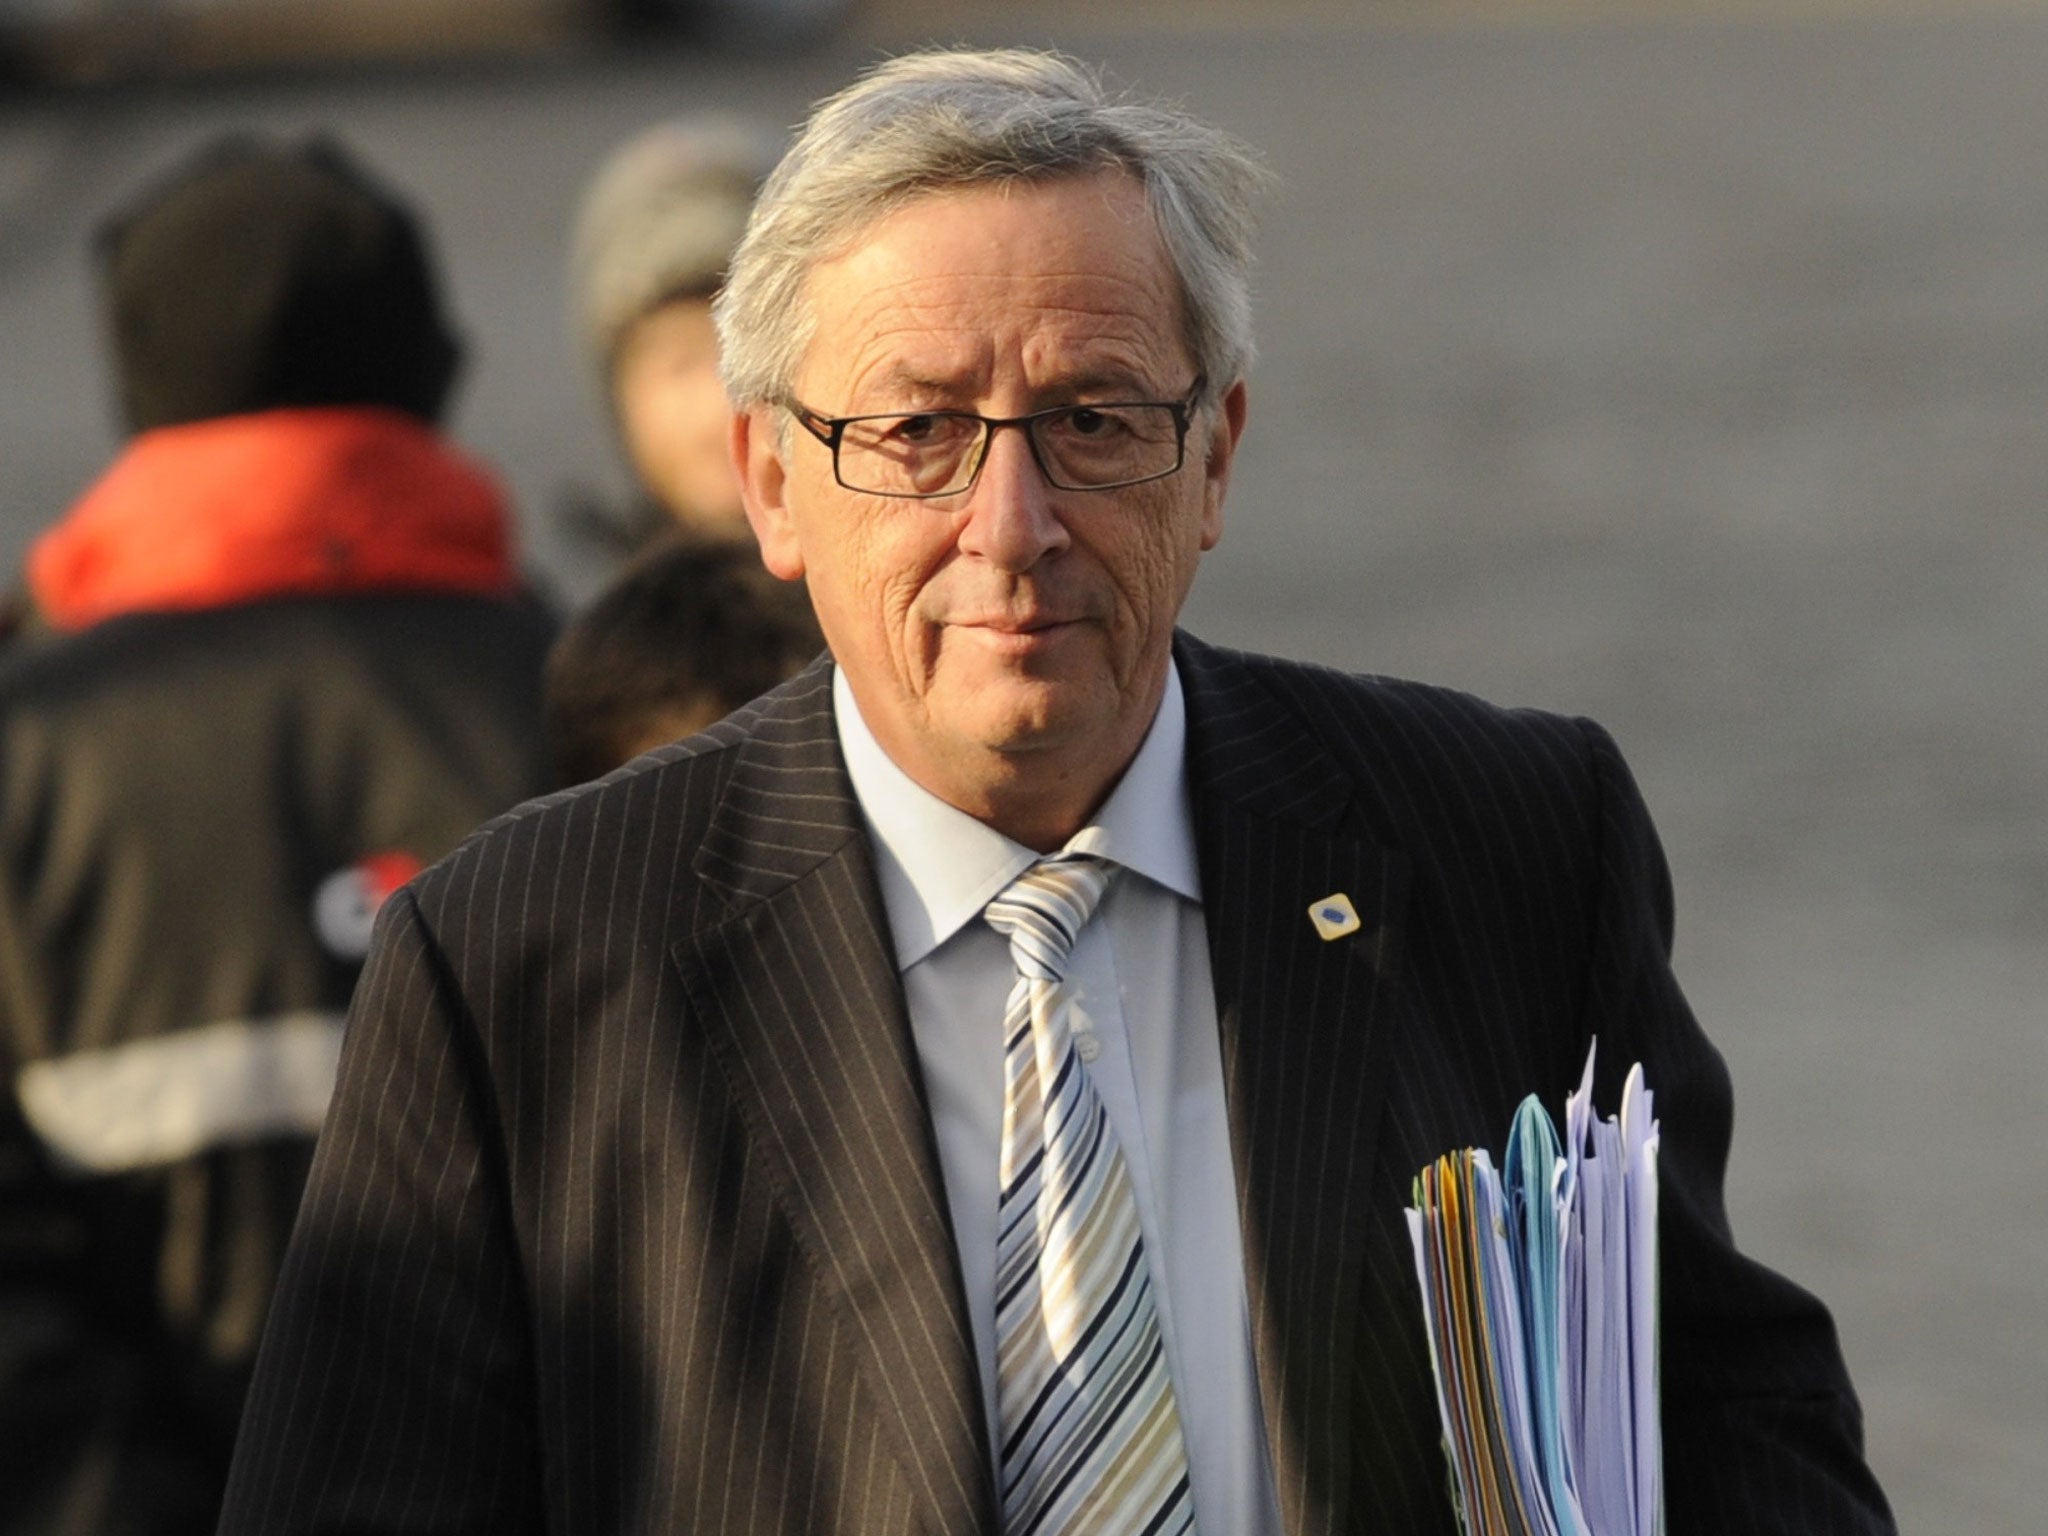 Jean-Claude Juncker has resigned following a spy scandal